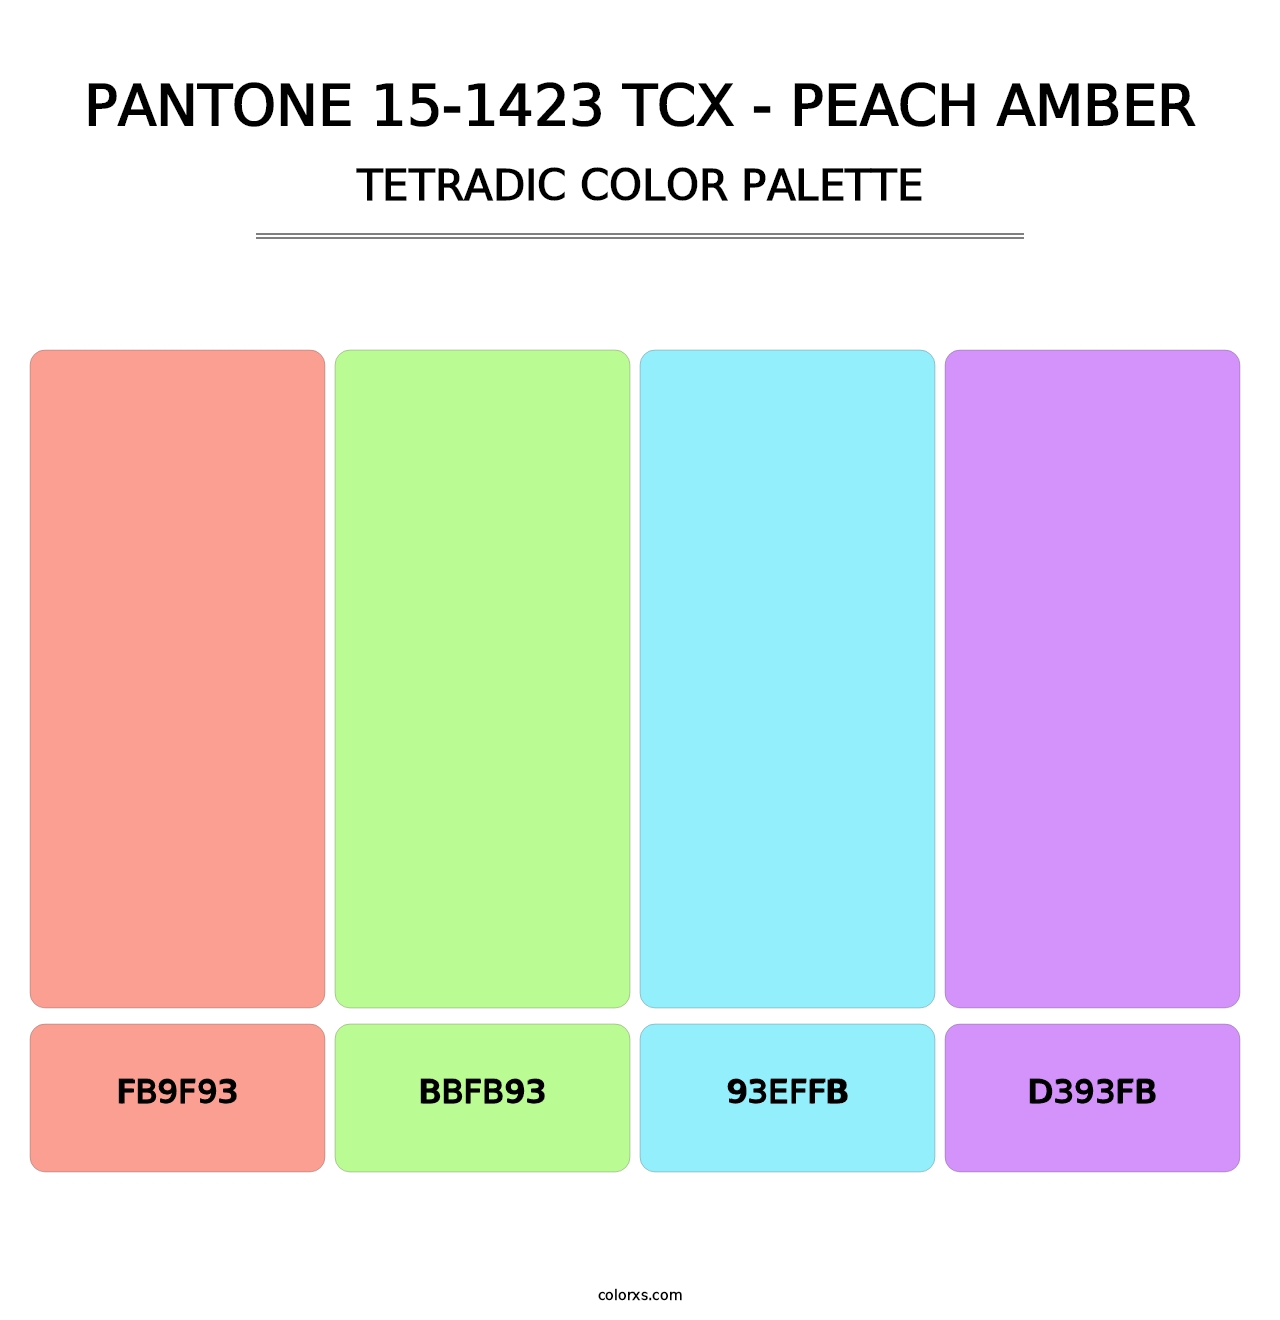 PANTONE 15-1423 TCX - Peach Amber - Tetradic Color Palette